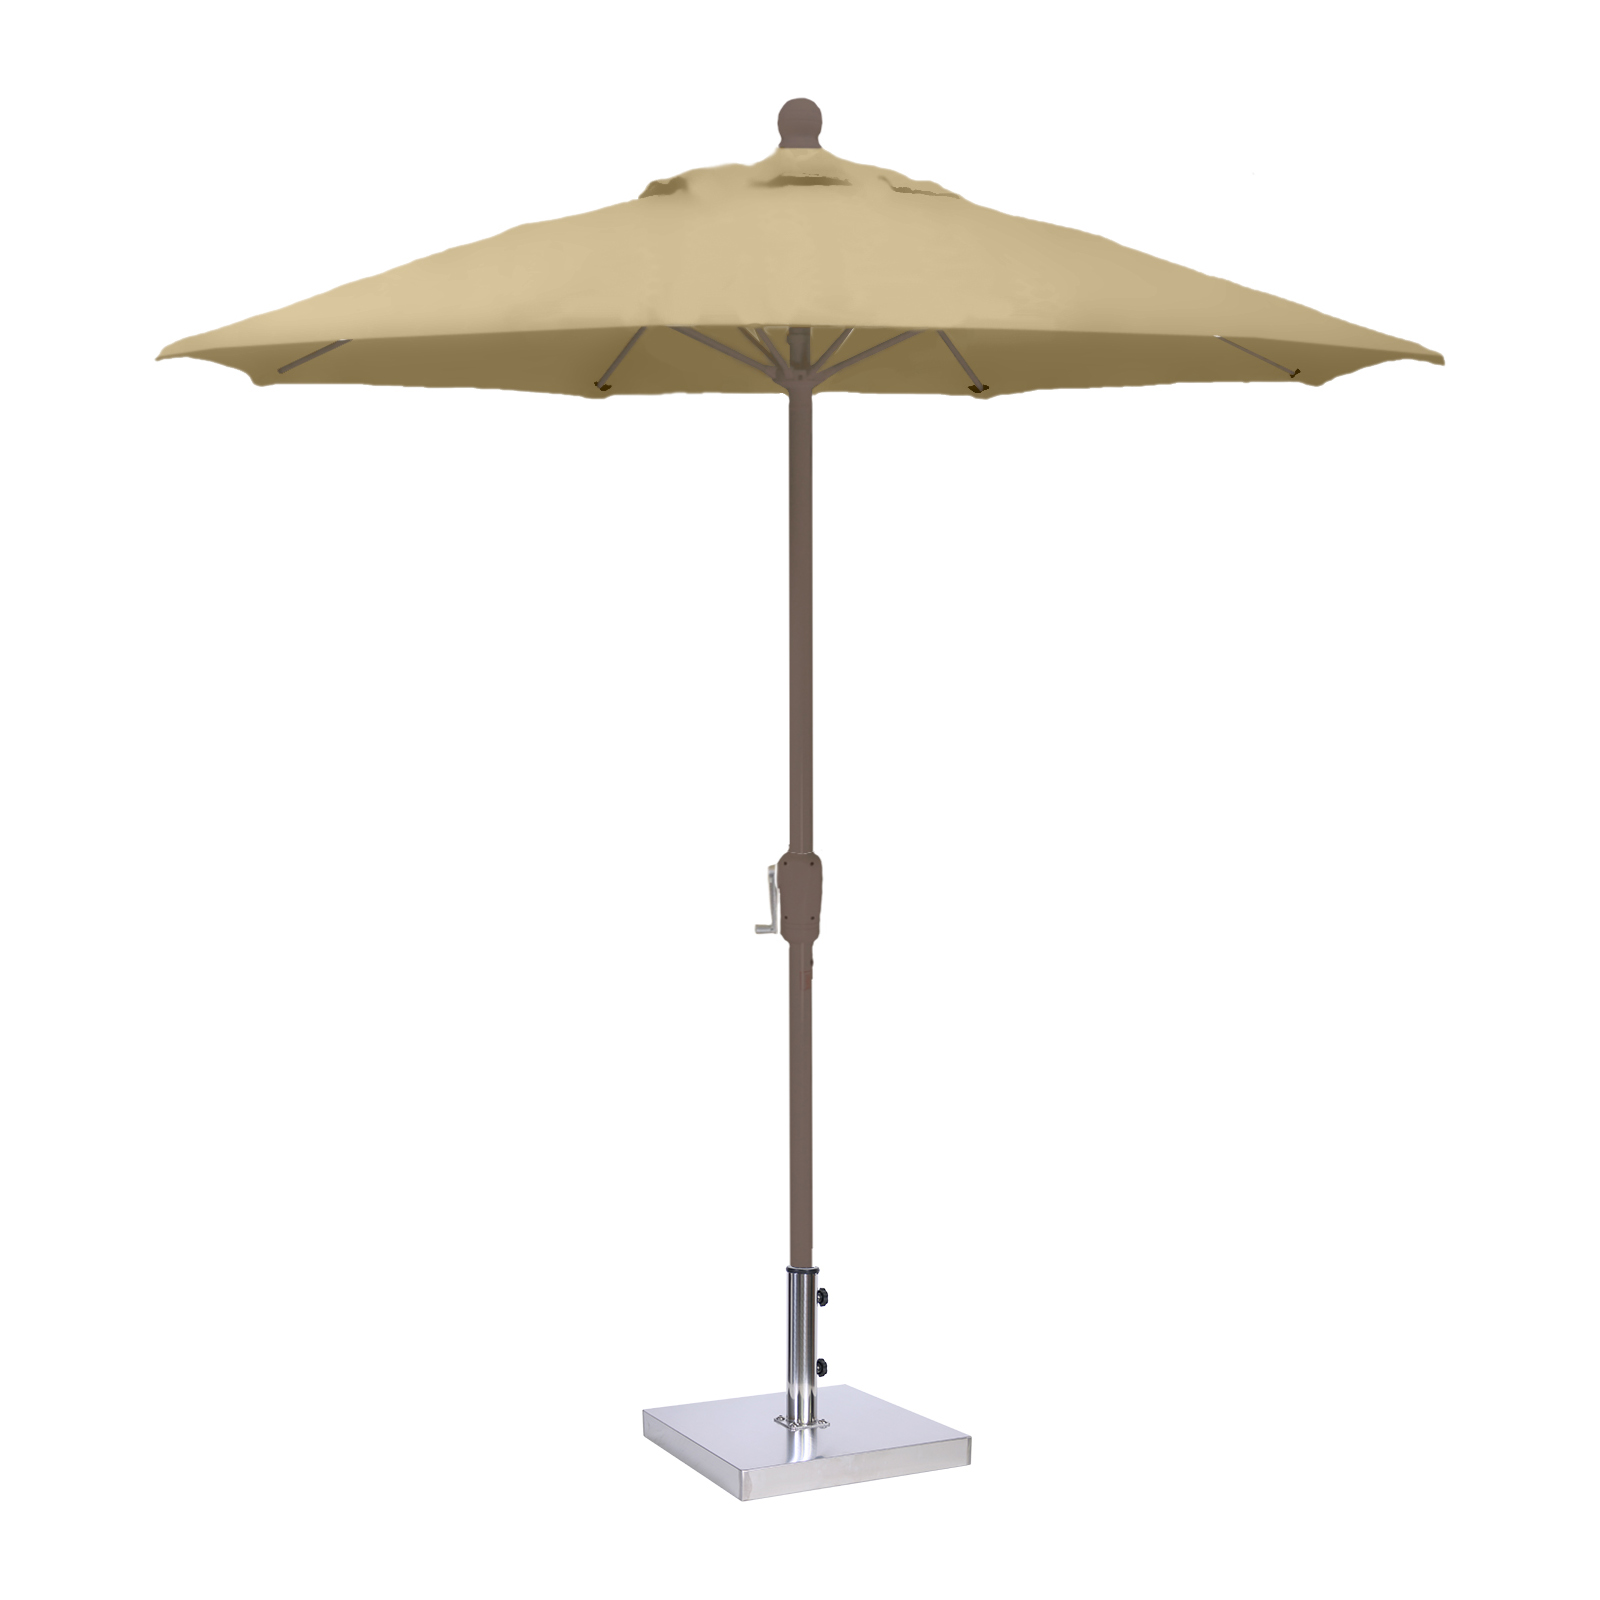 MiYu Furniture  9 ft Fiberglass Market Umbrella with Crank - Champagne Frame